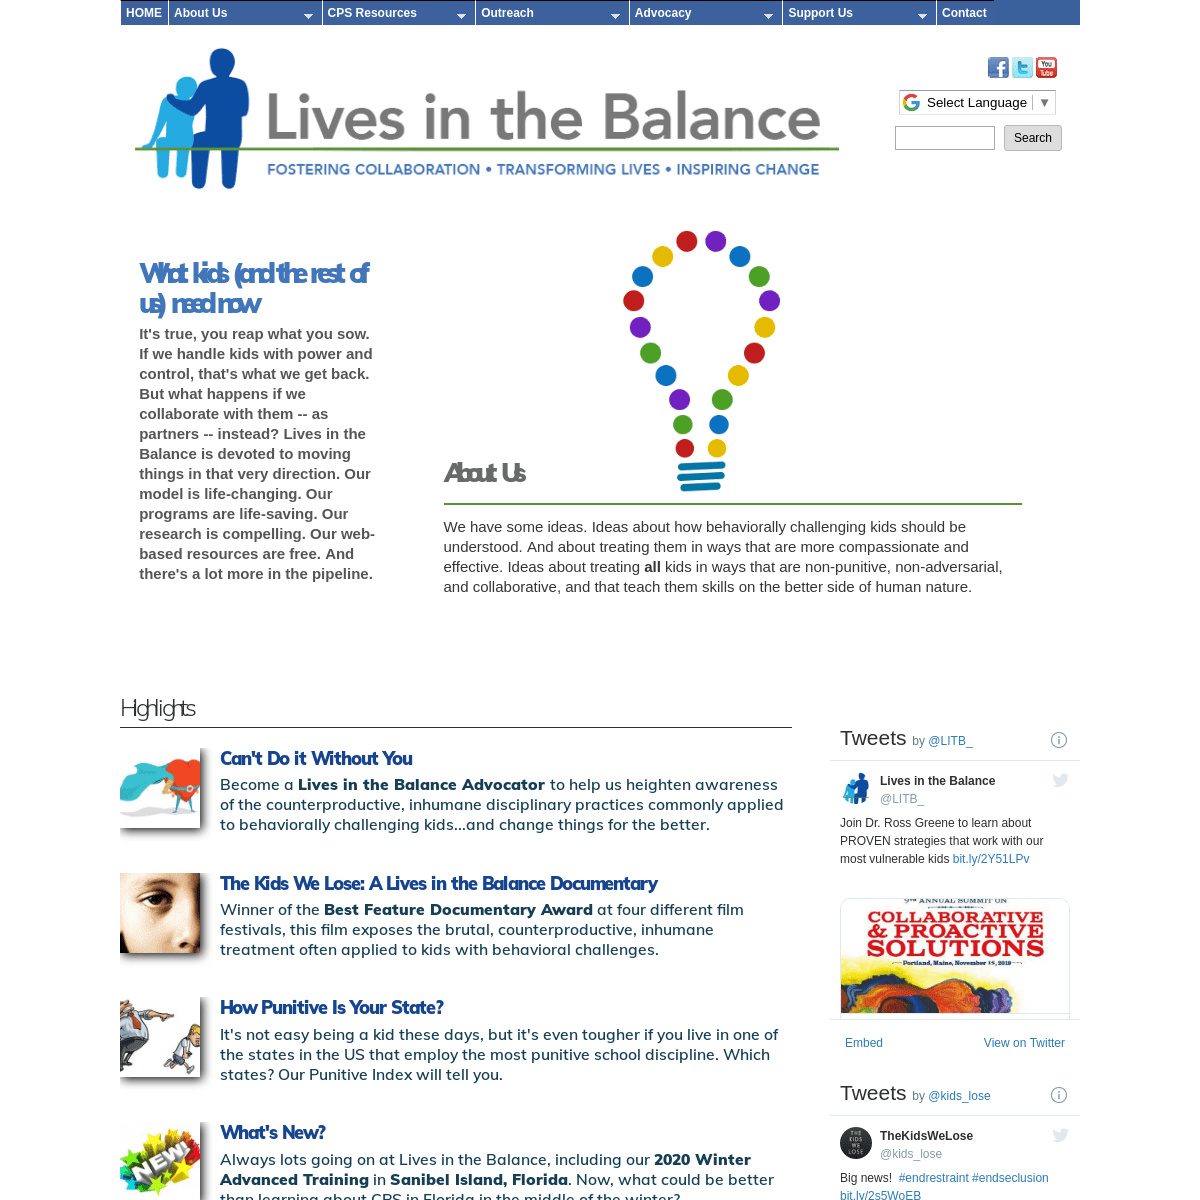 A complete backup of livesinthebalance.org